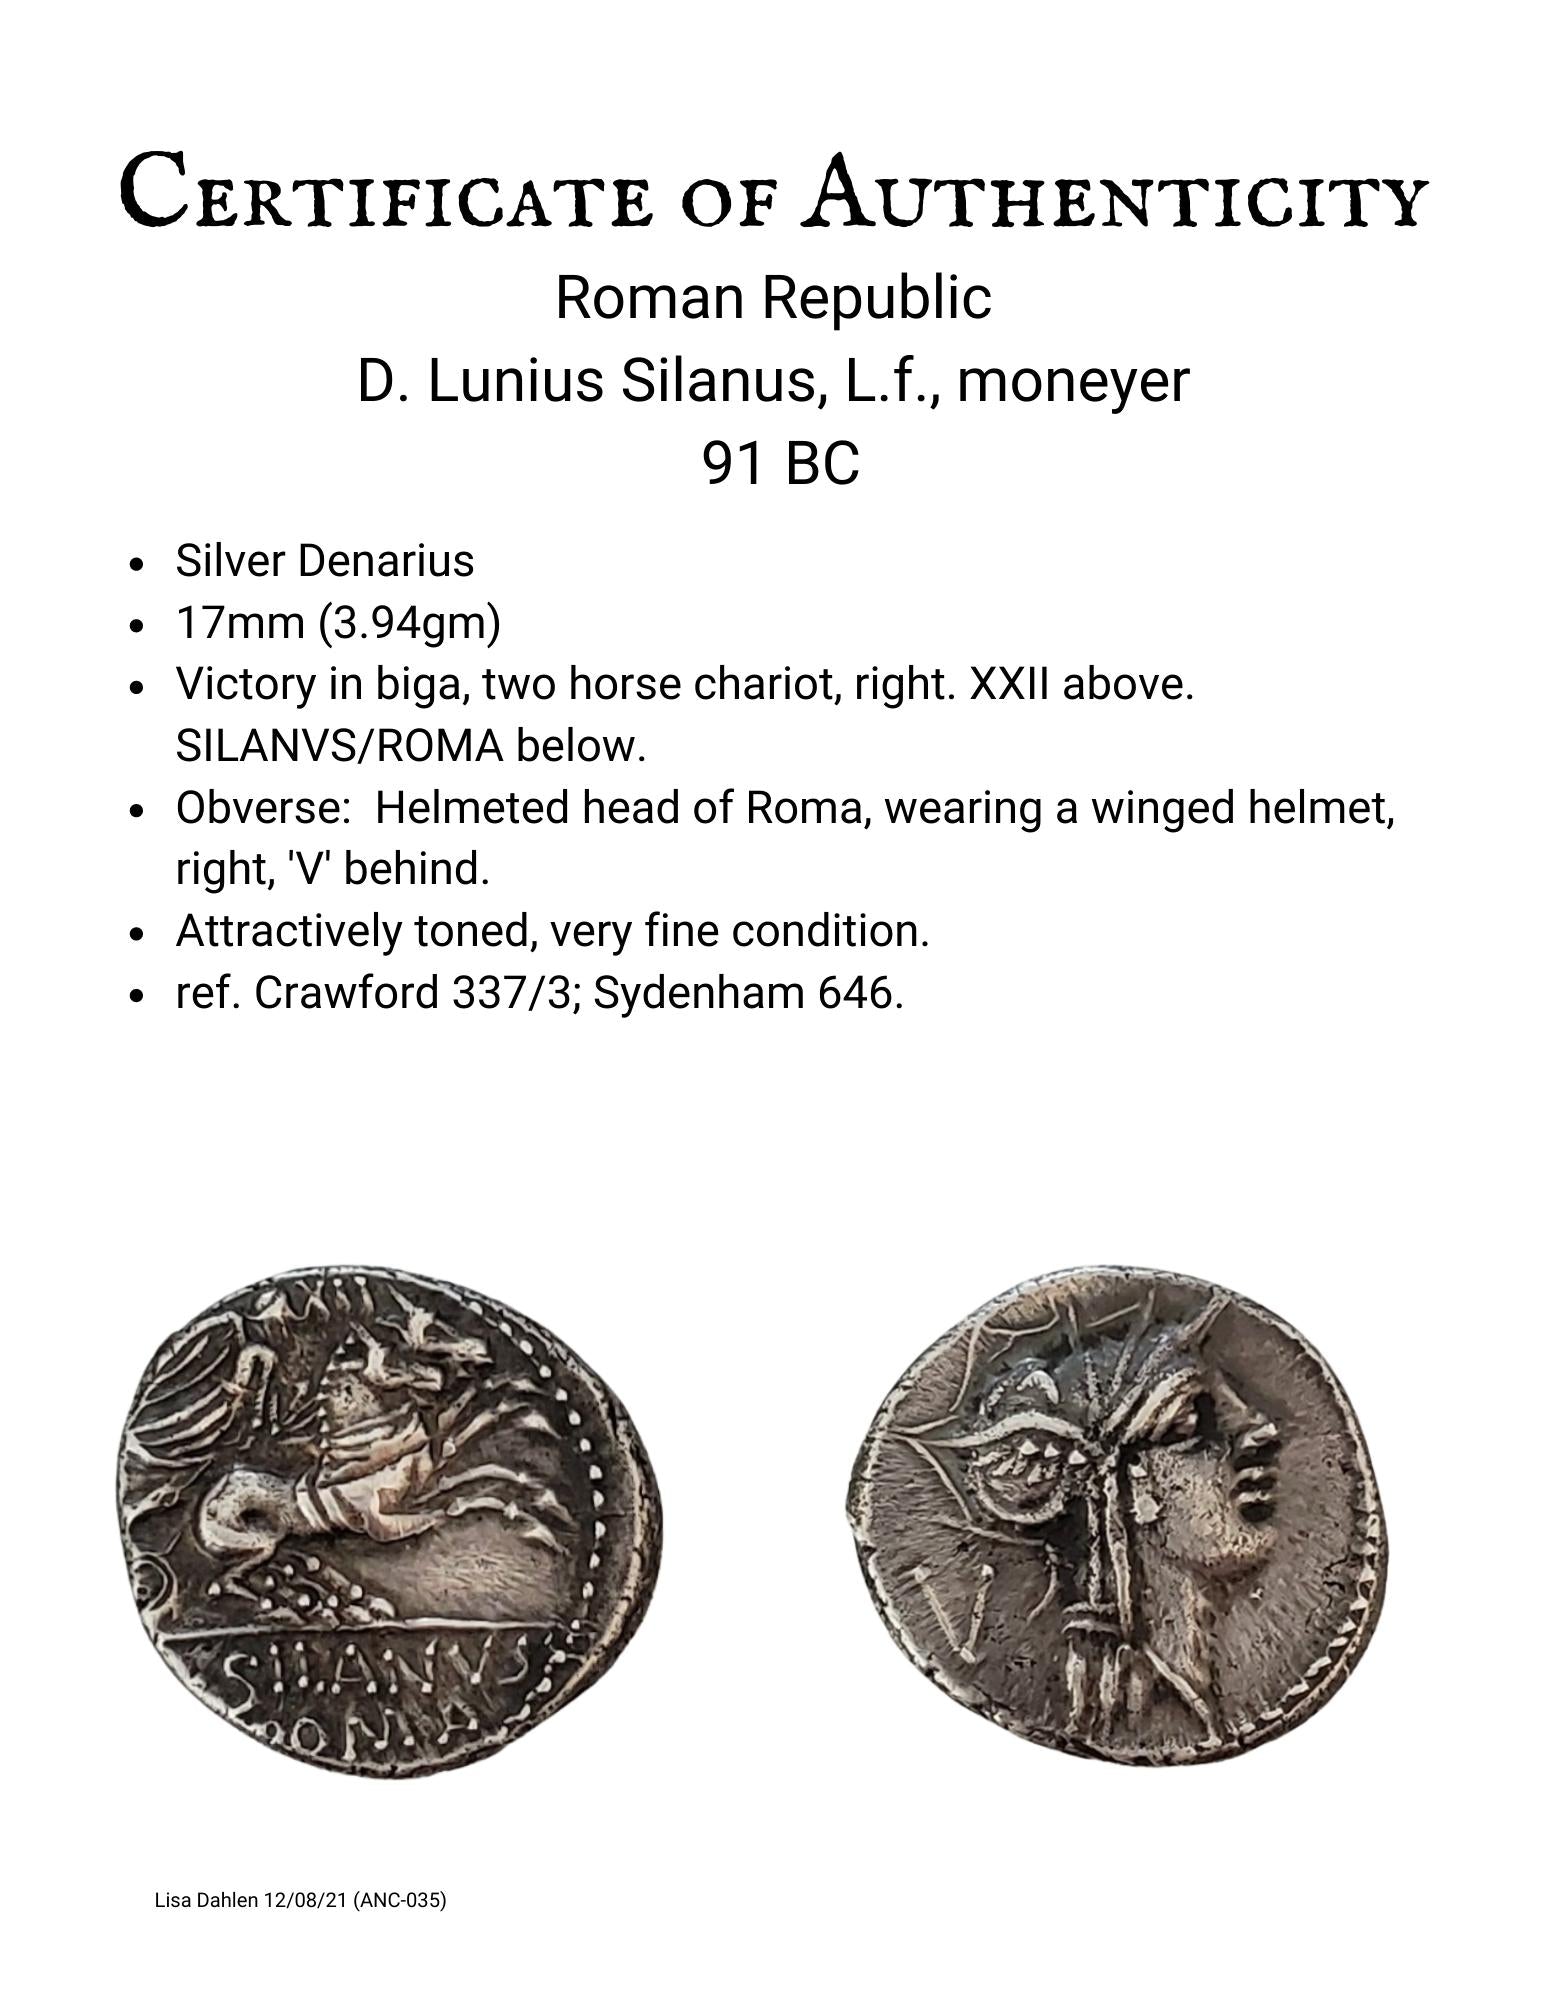 Roman Republic Silver Denarius Coin Victory in 2 horse chariot Roma on back certificate